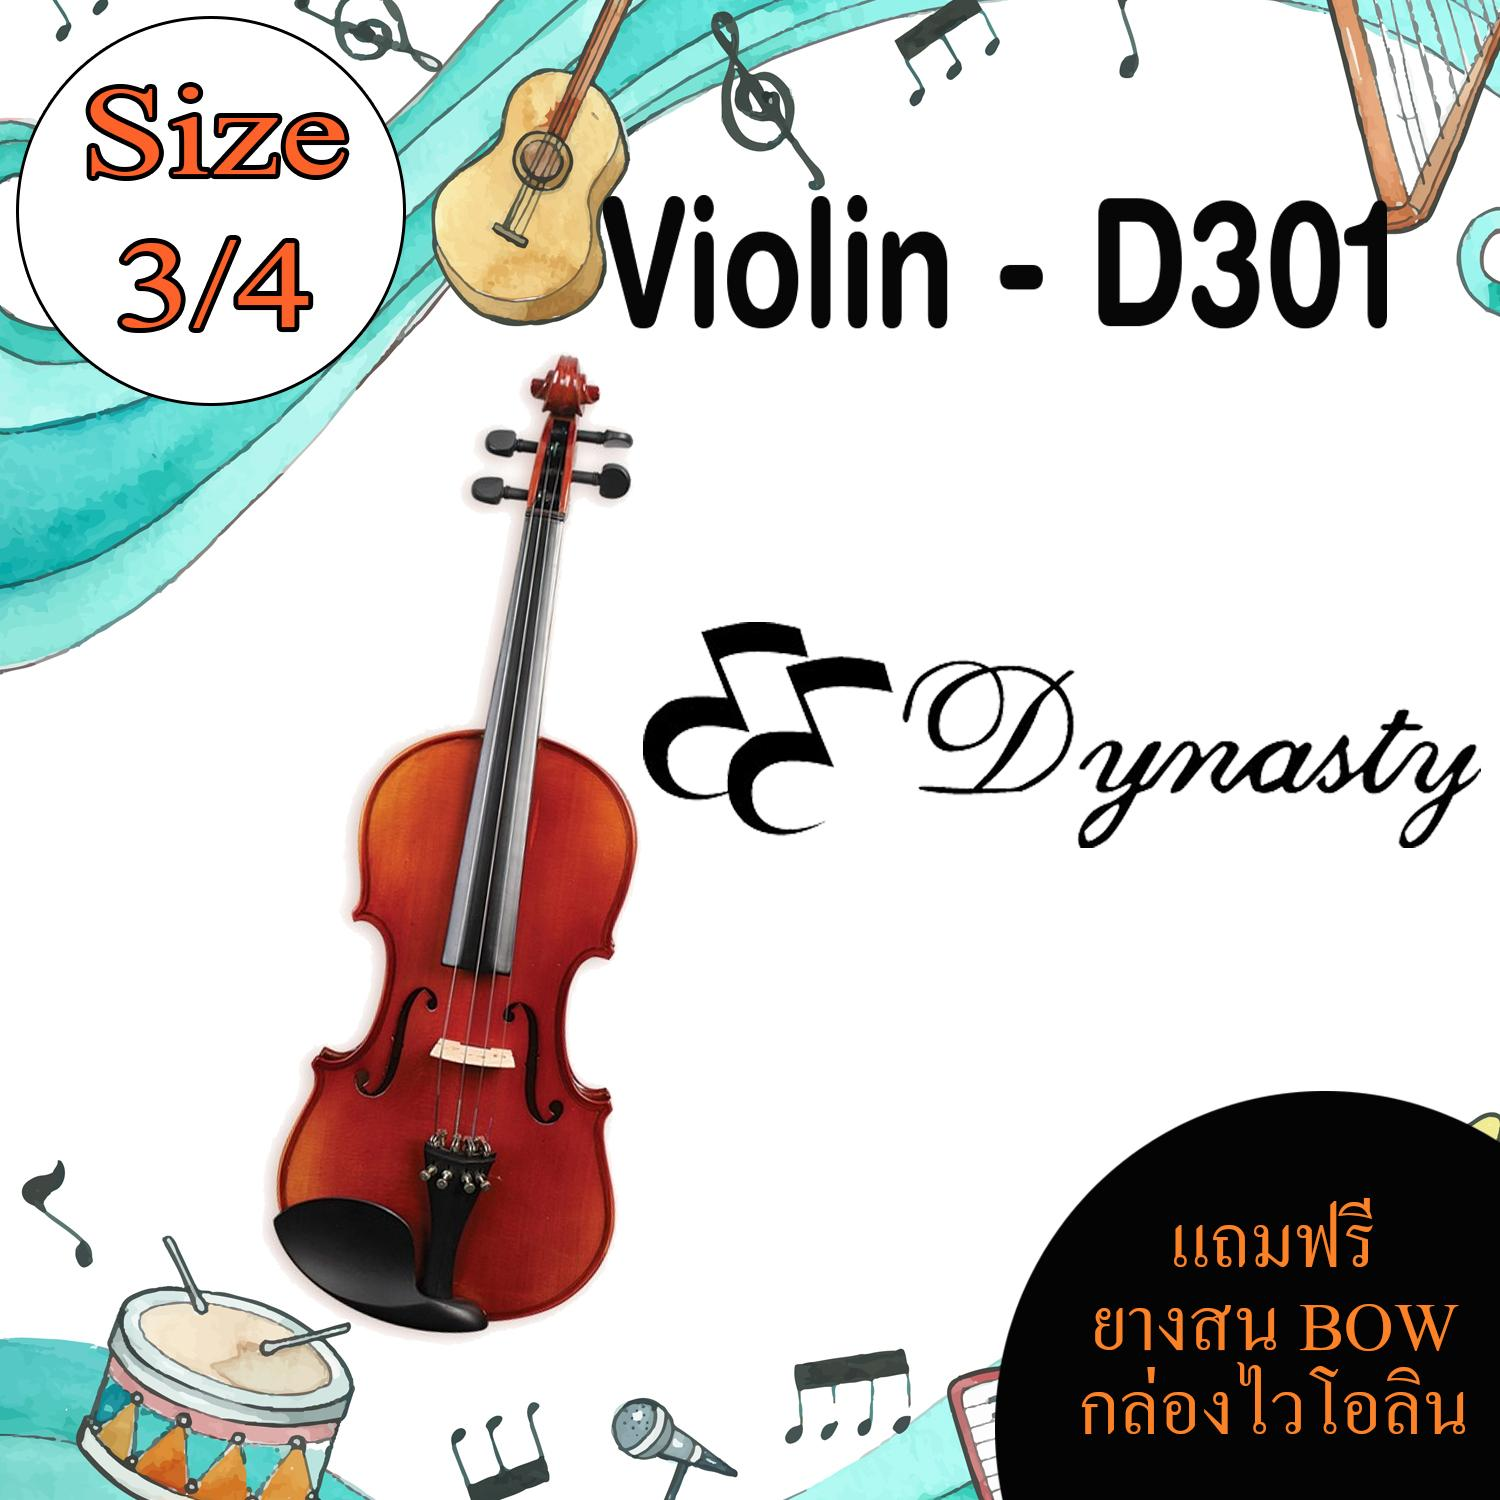 DYNASTY Violin D301 3/4 ไวโอลิน